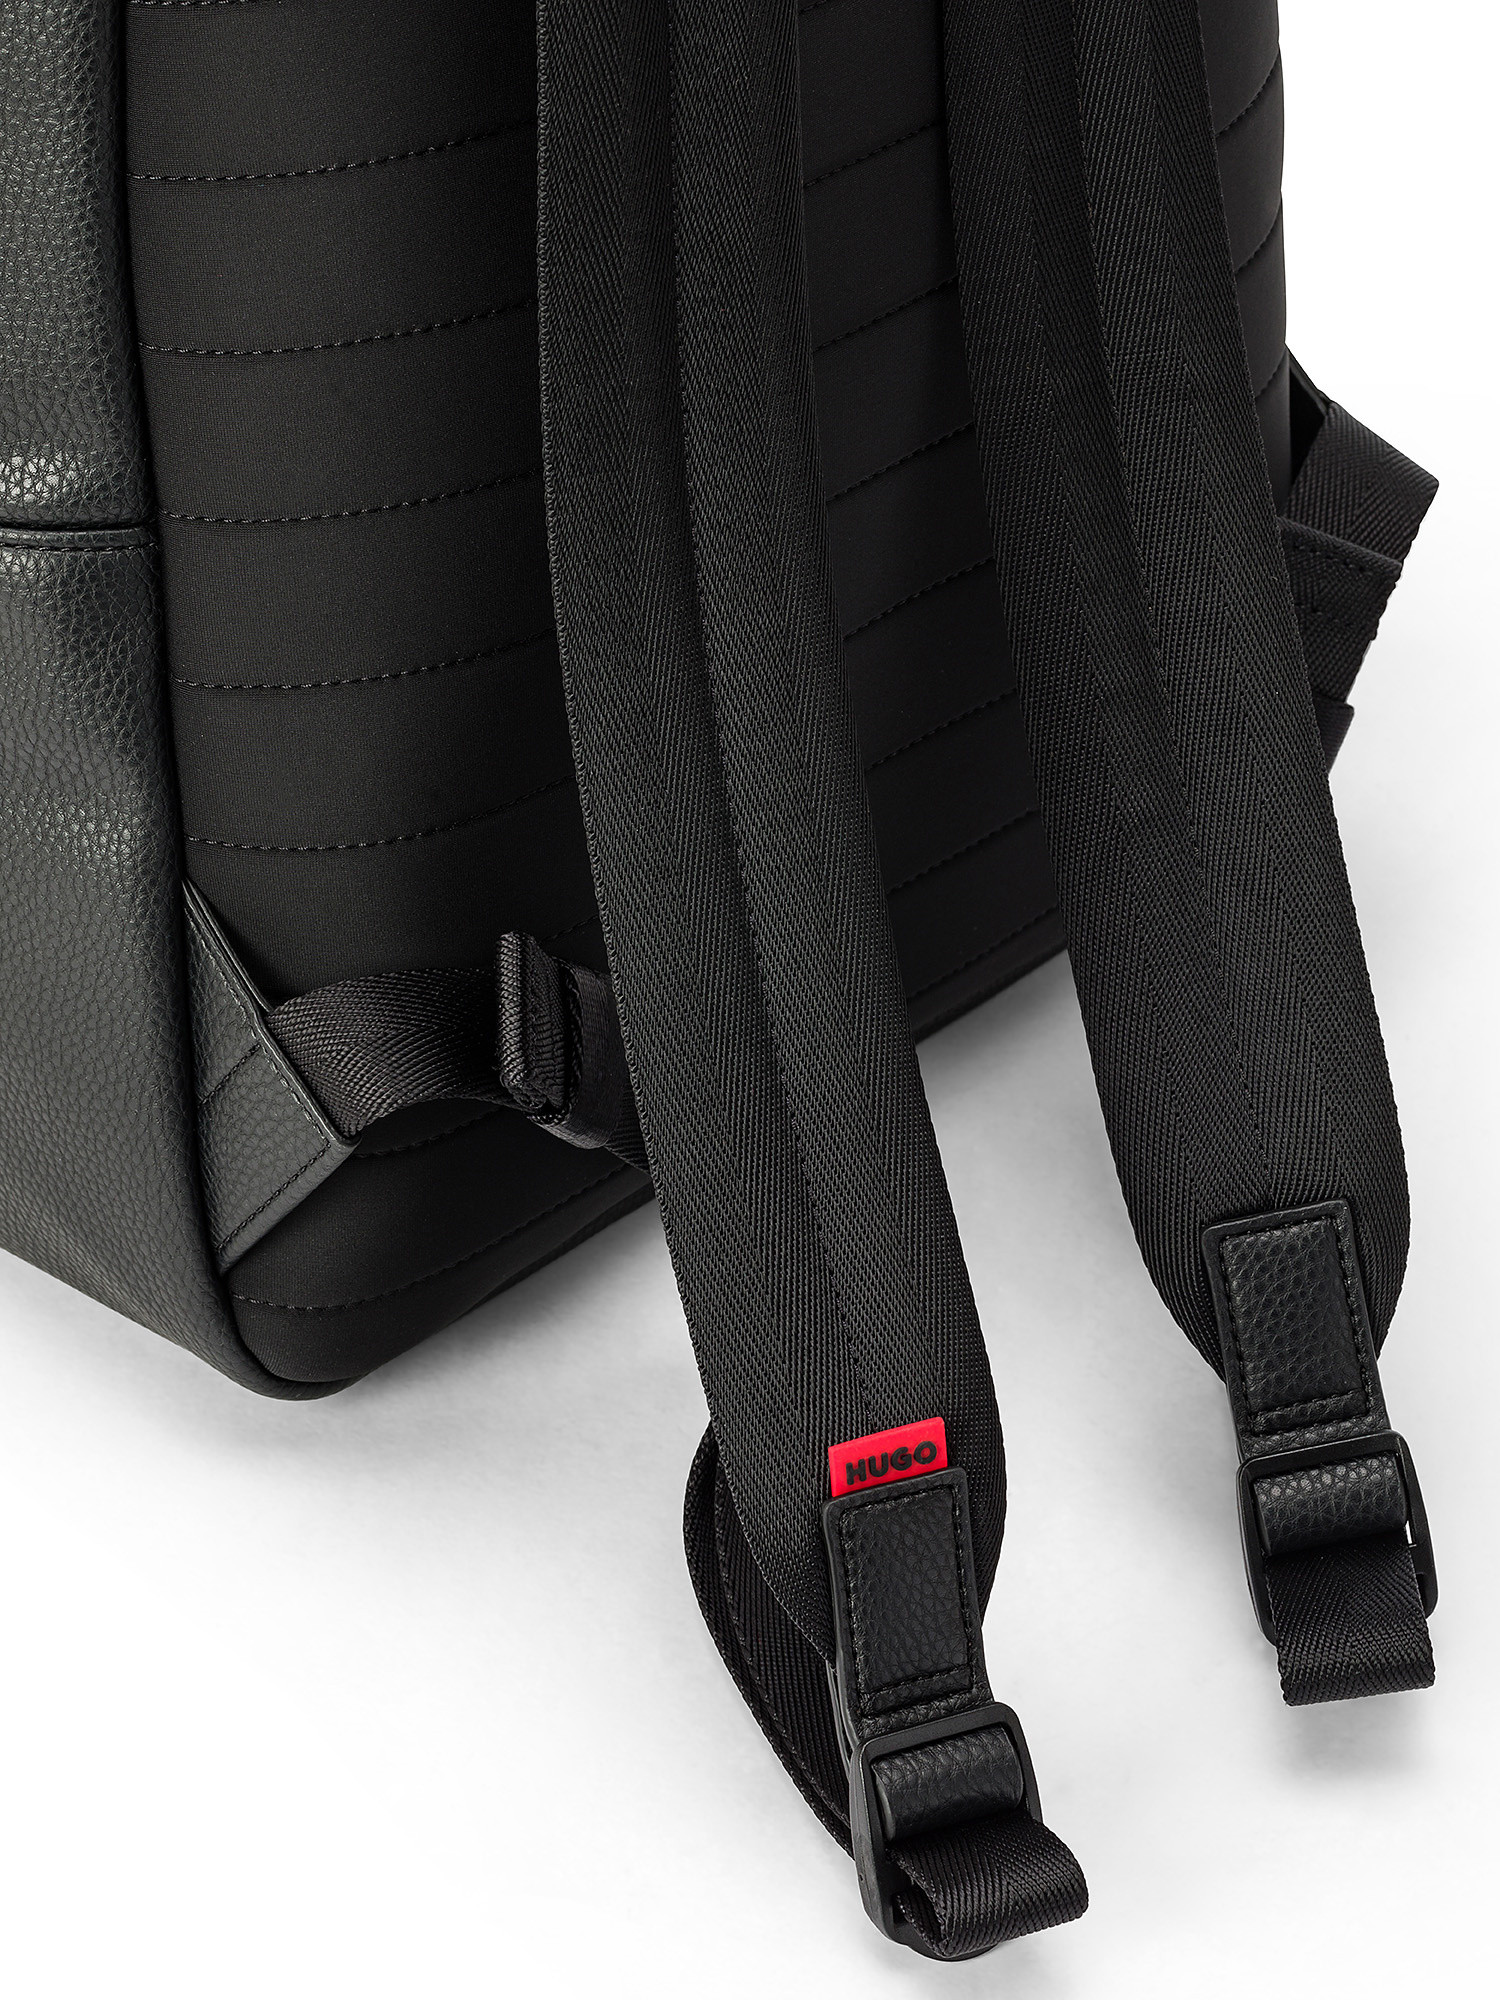 Hugo - Ecoleather backpack with logo, Black, large image number 2